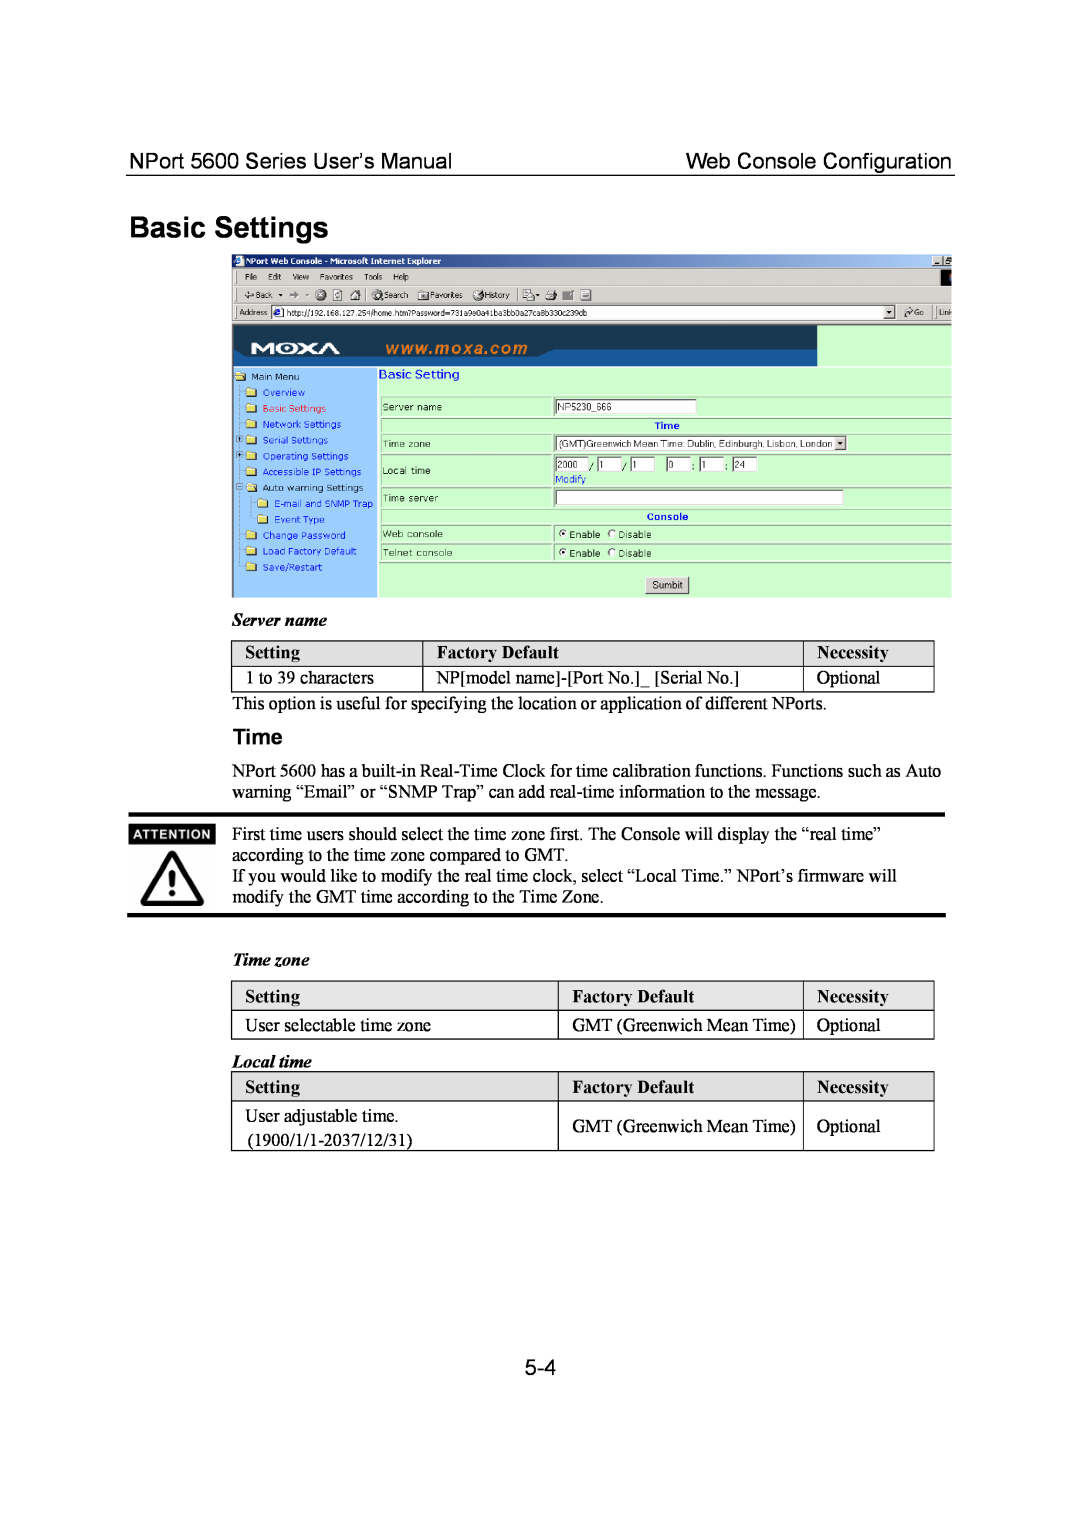 Moxa Technologies user manual Basic Settings, Time, NPort 5600 Series User’s Manual, Web Console Configuration 